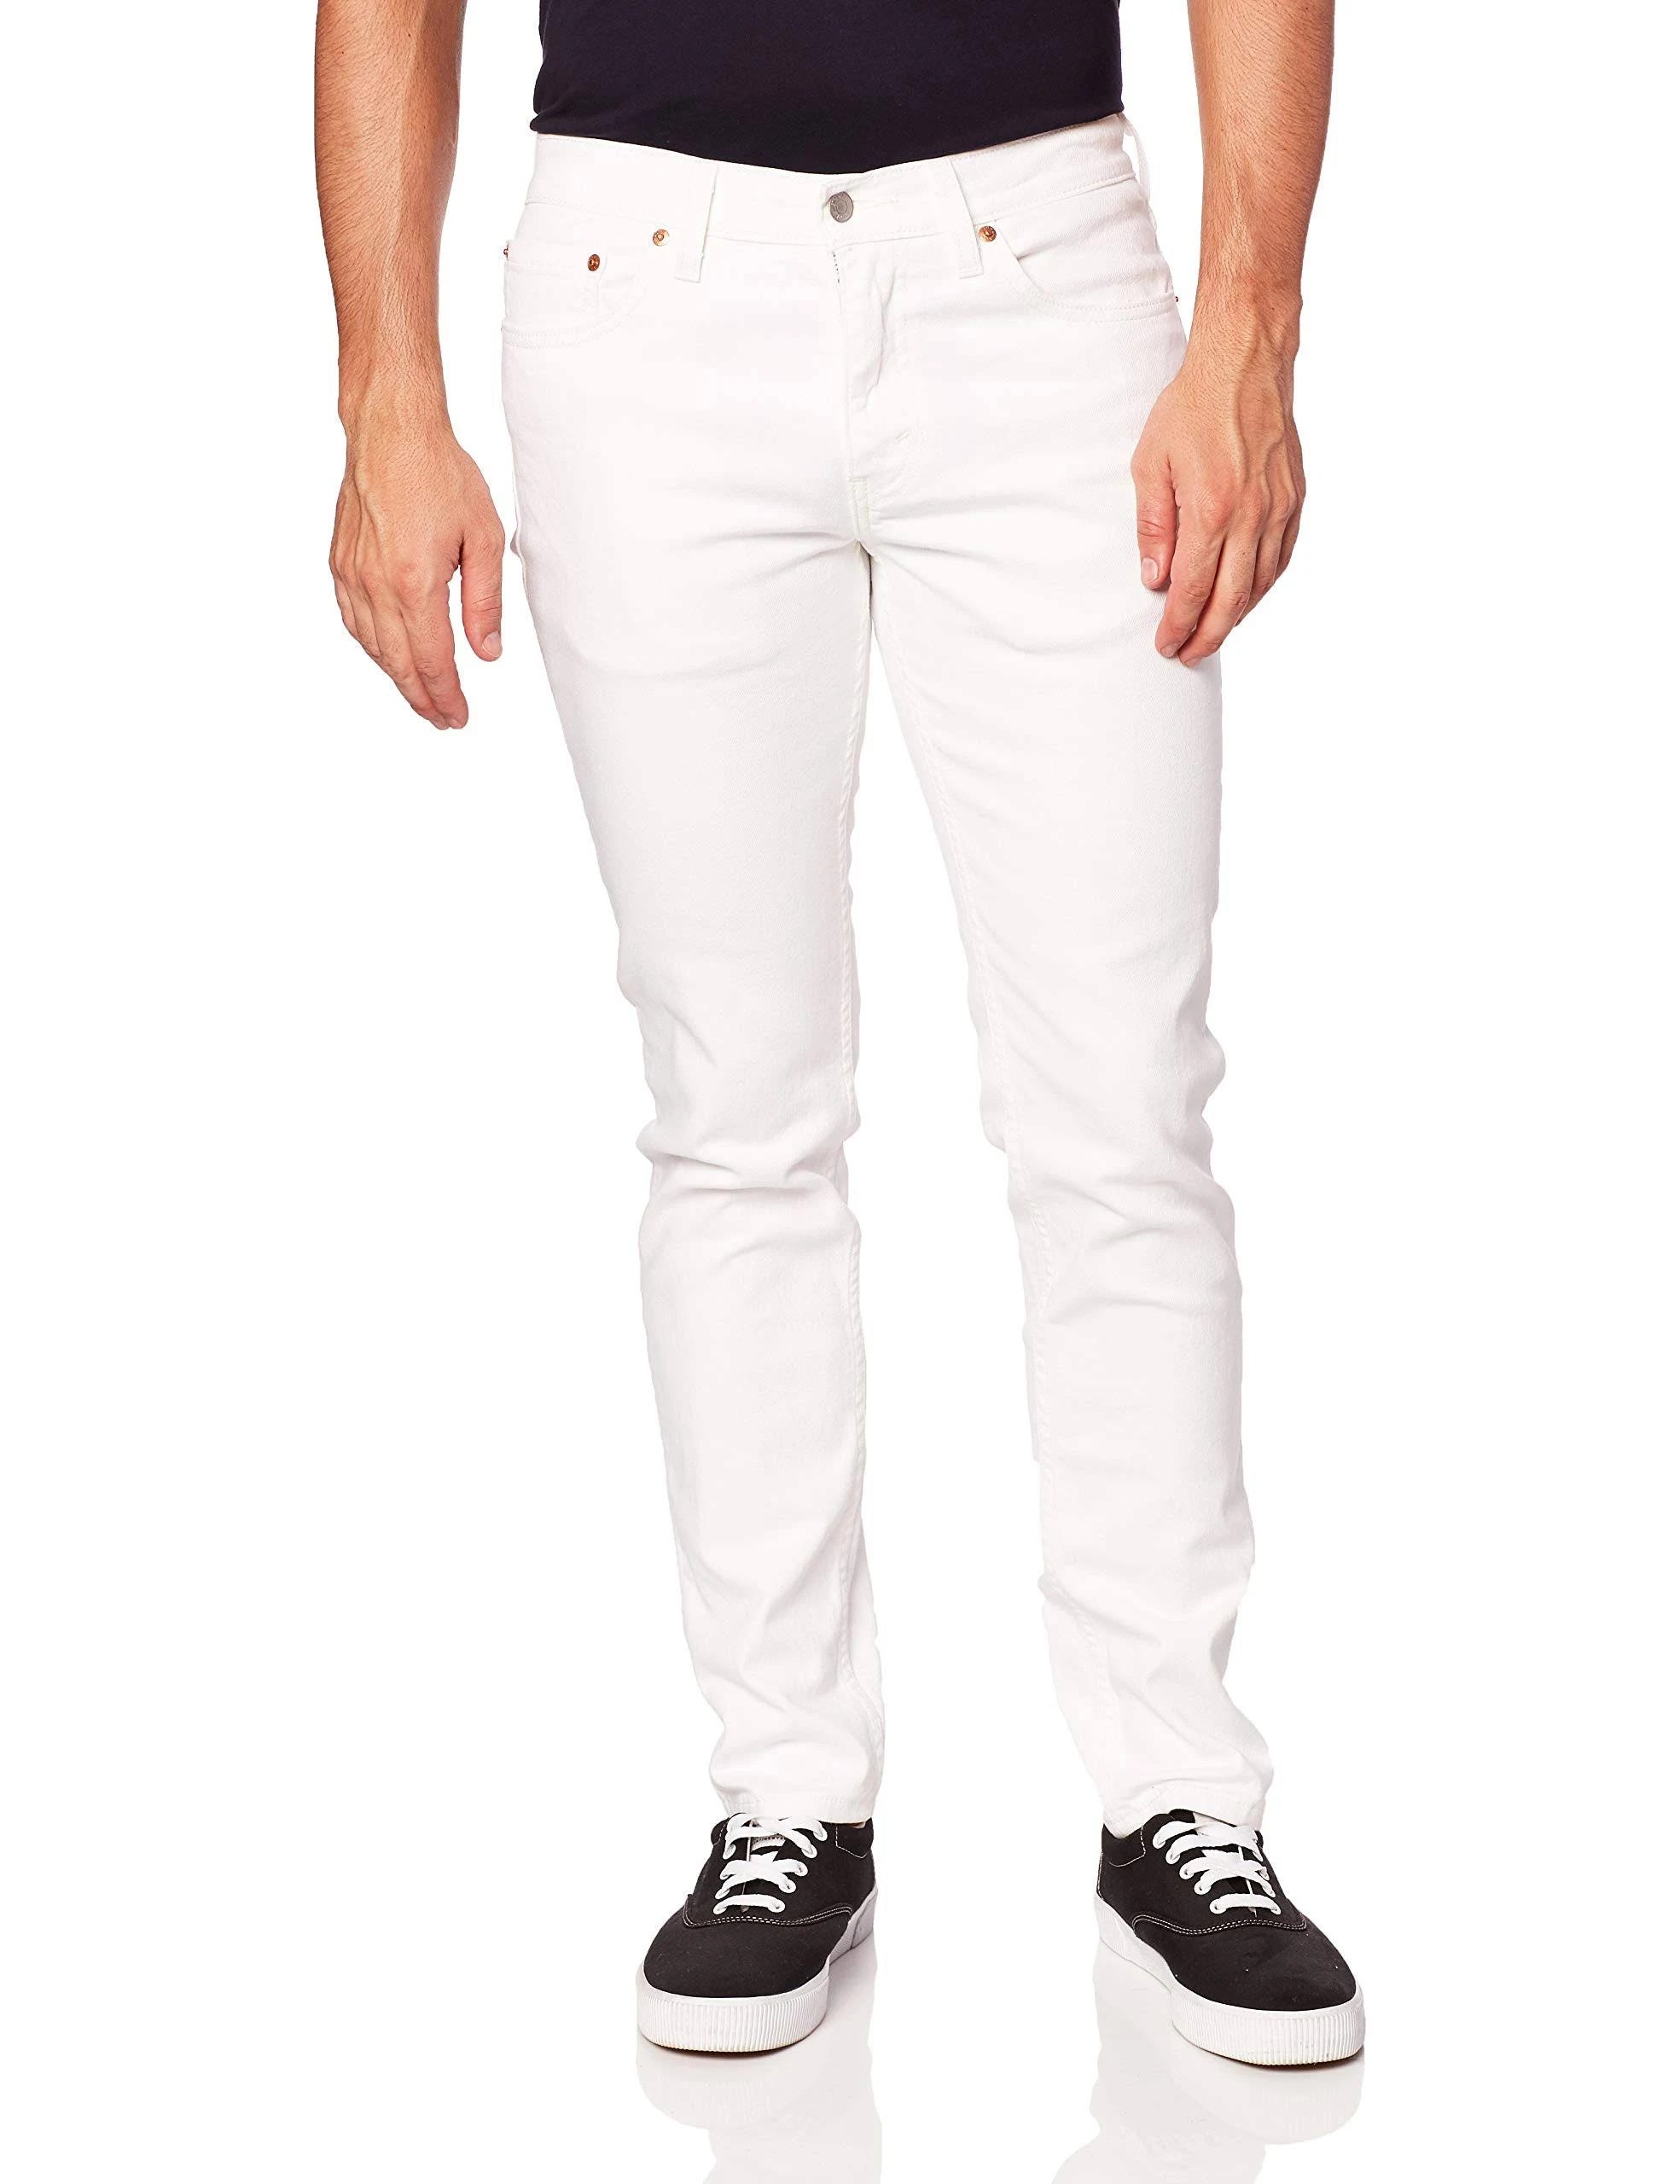 Levi's White Men's 511 Slim Fit Jeans - Sleek, Modern Denim Stretch | Image